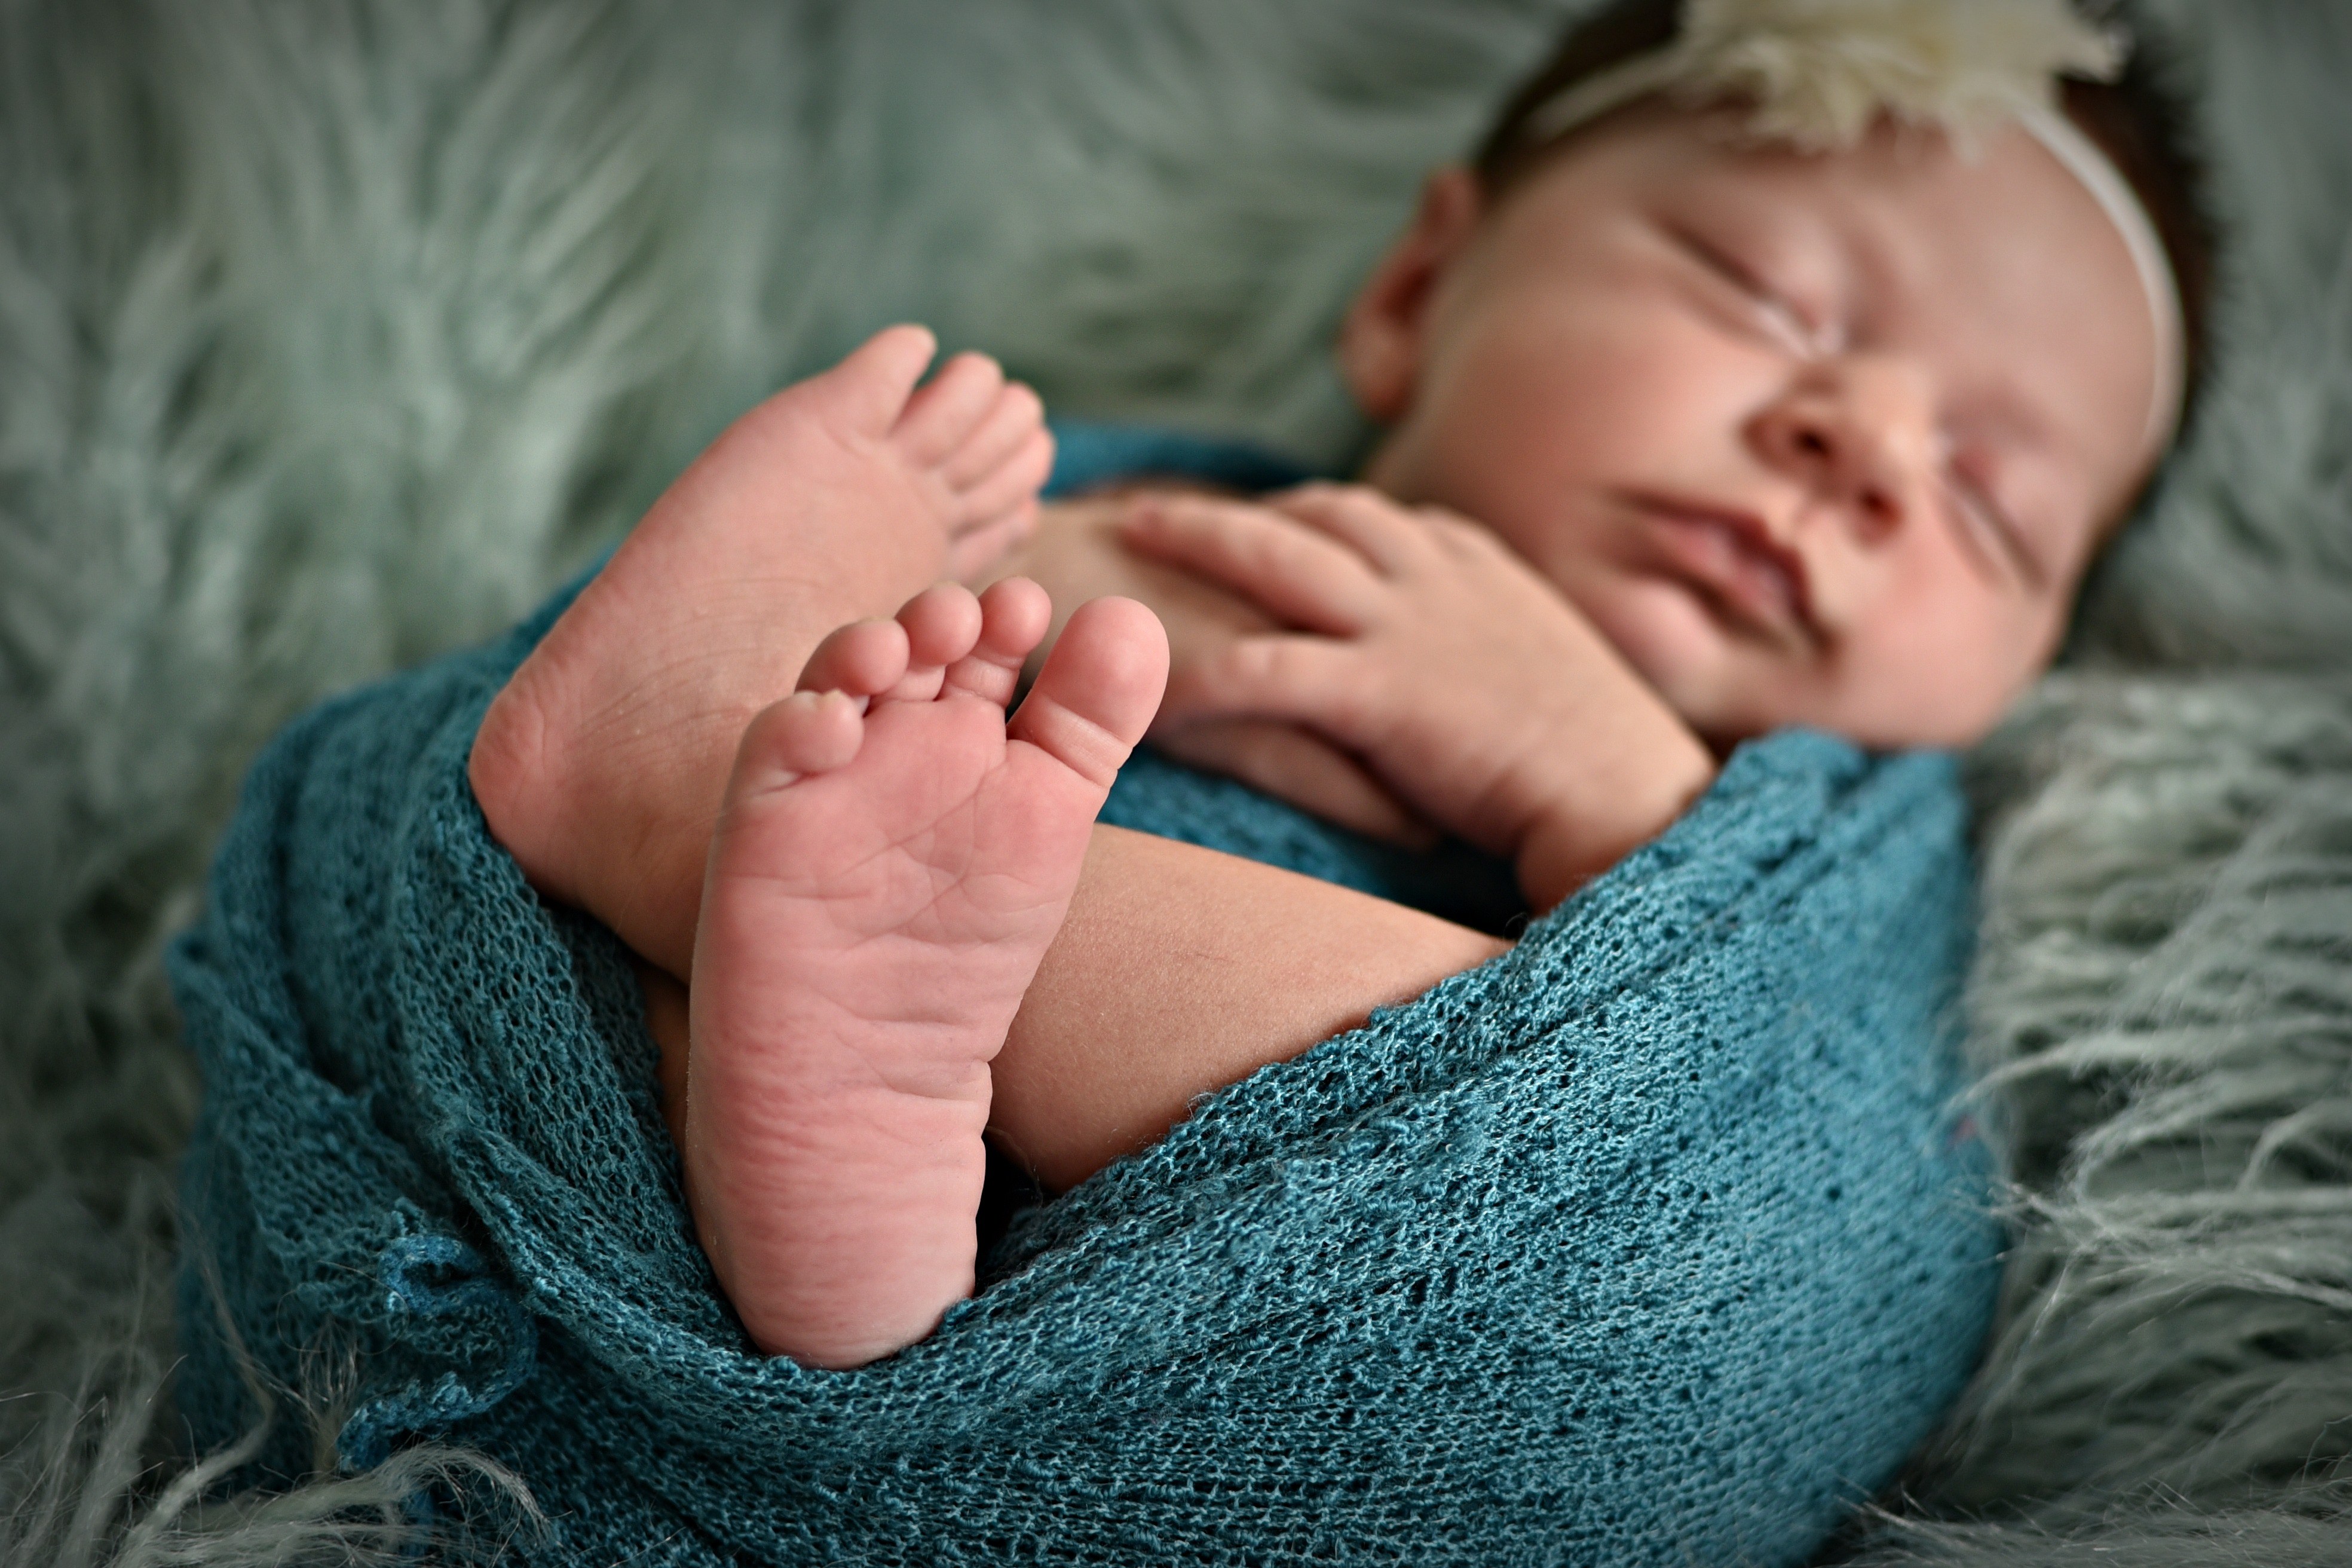 New Hampshire Newborn Photographer 4 - Portfolio: Infant Photography